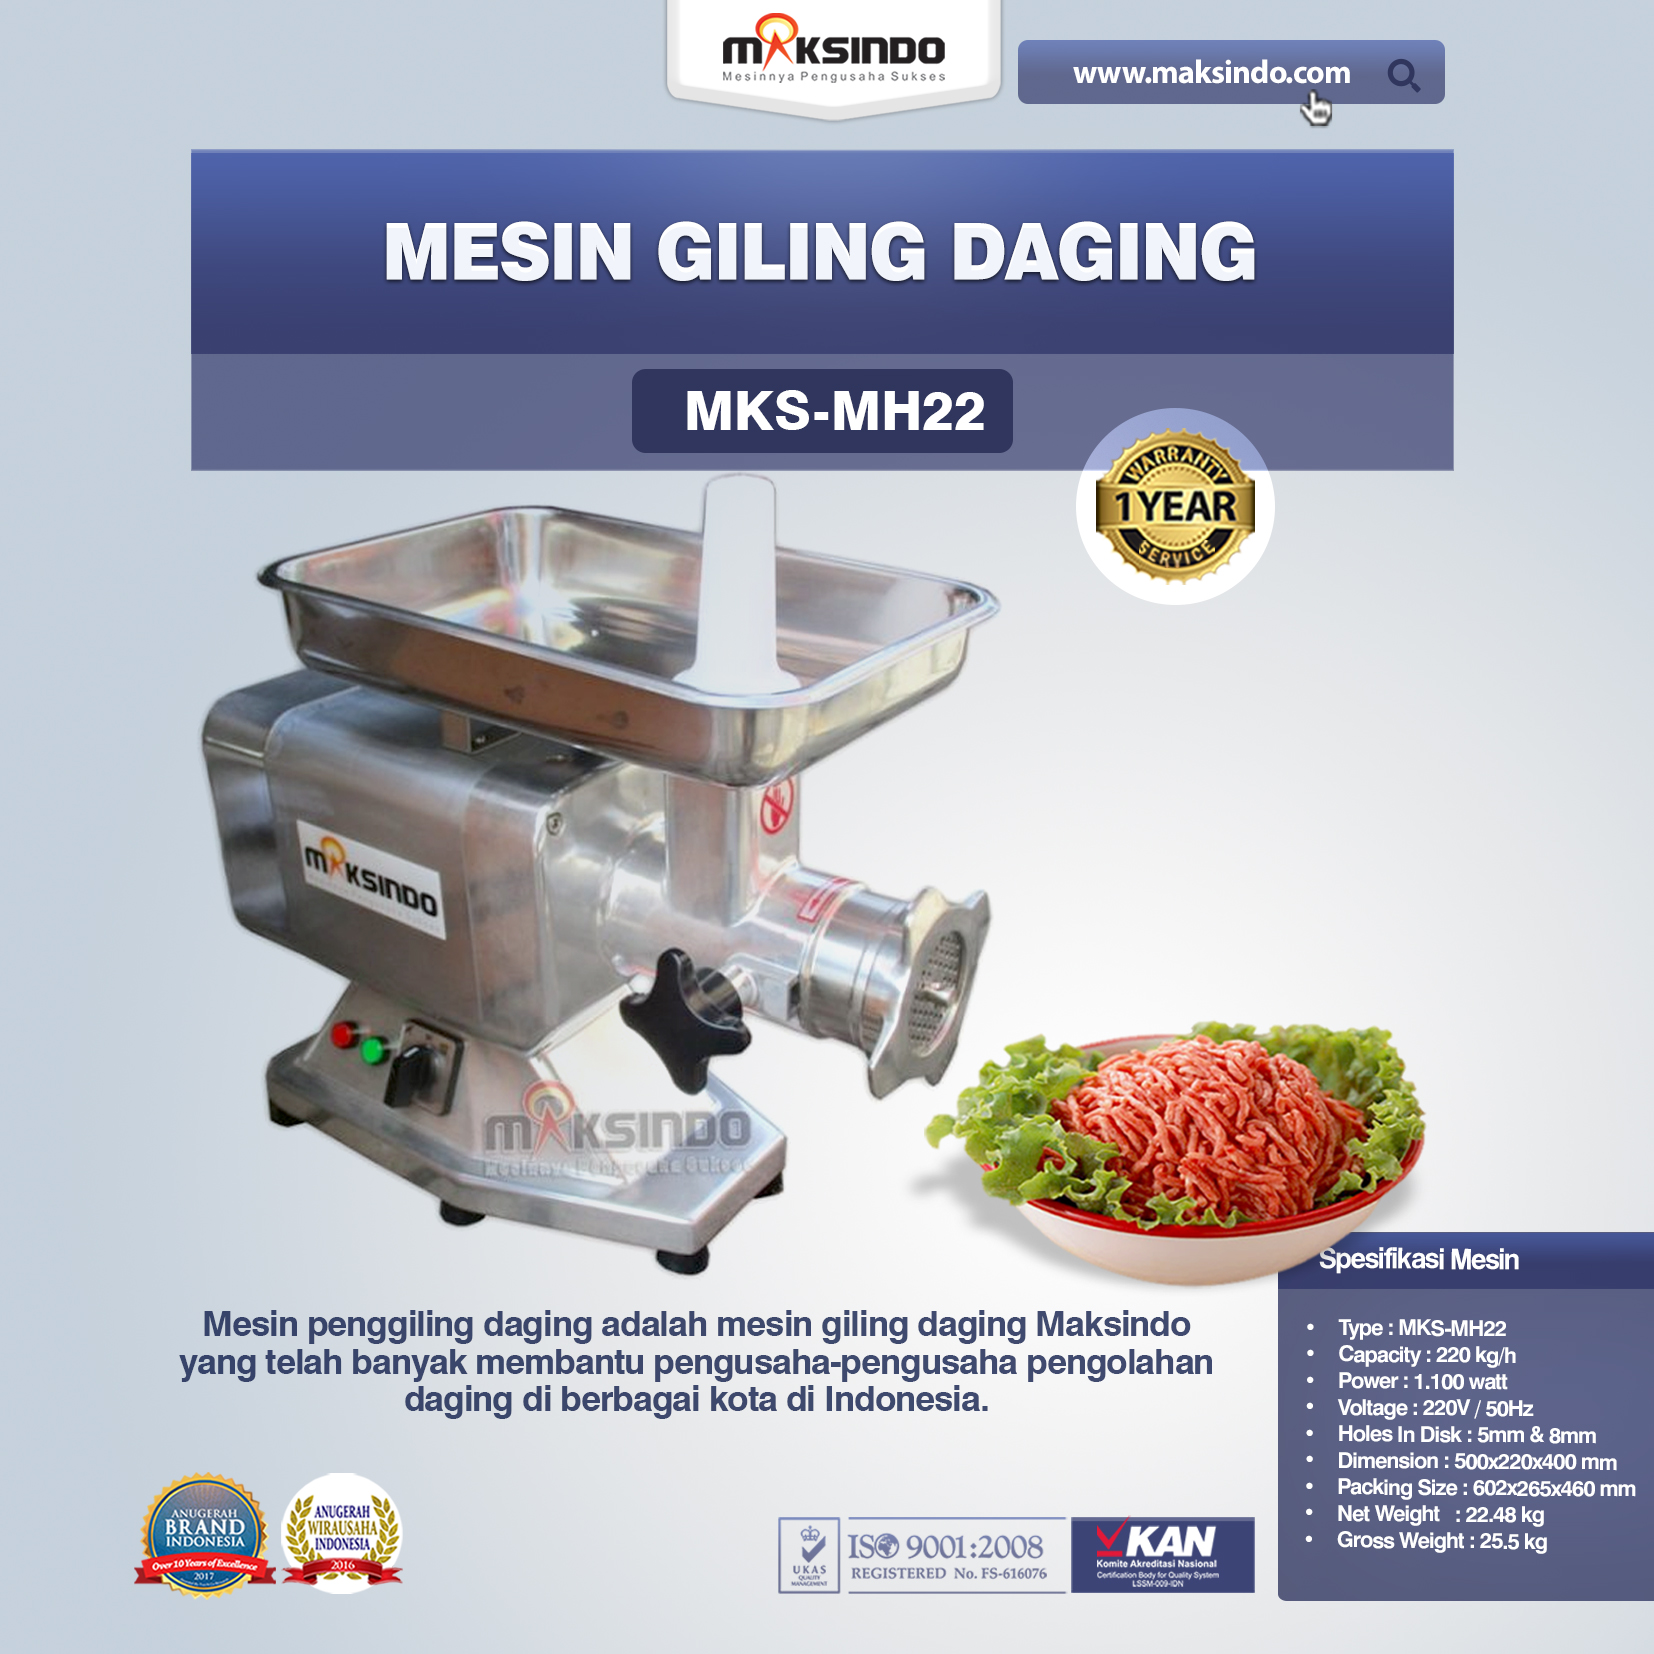 Mesin Giling Daging MKS-MH22